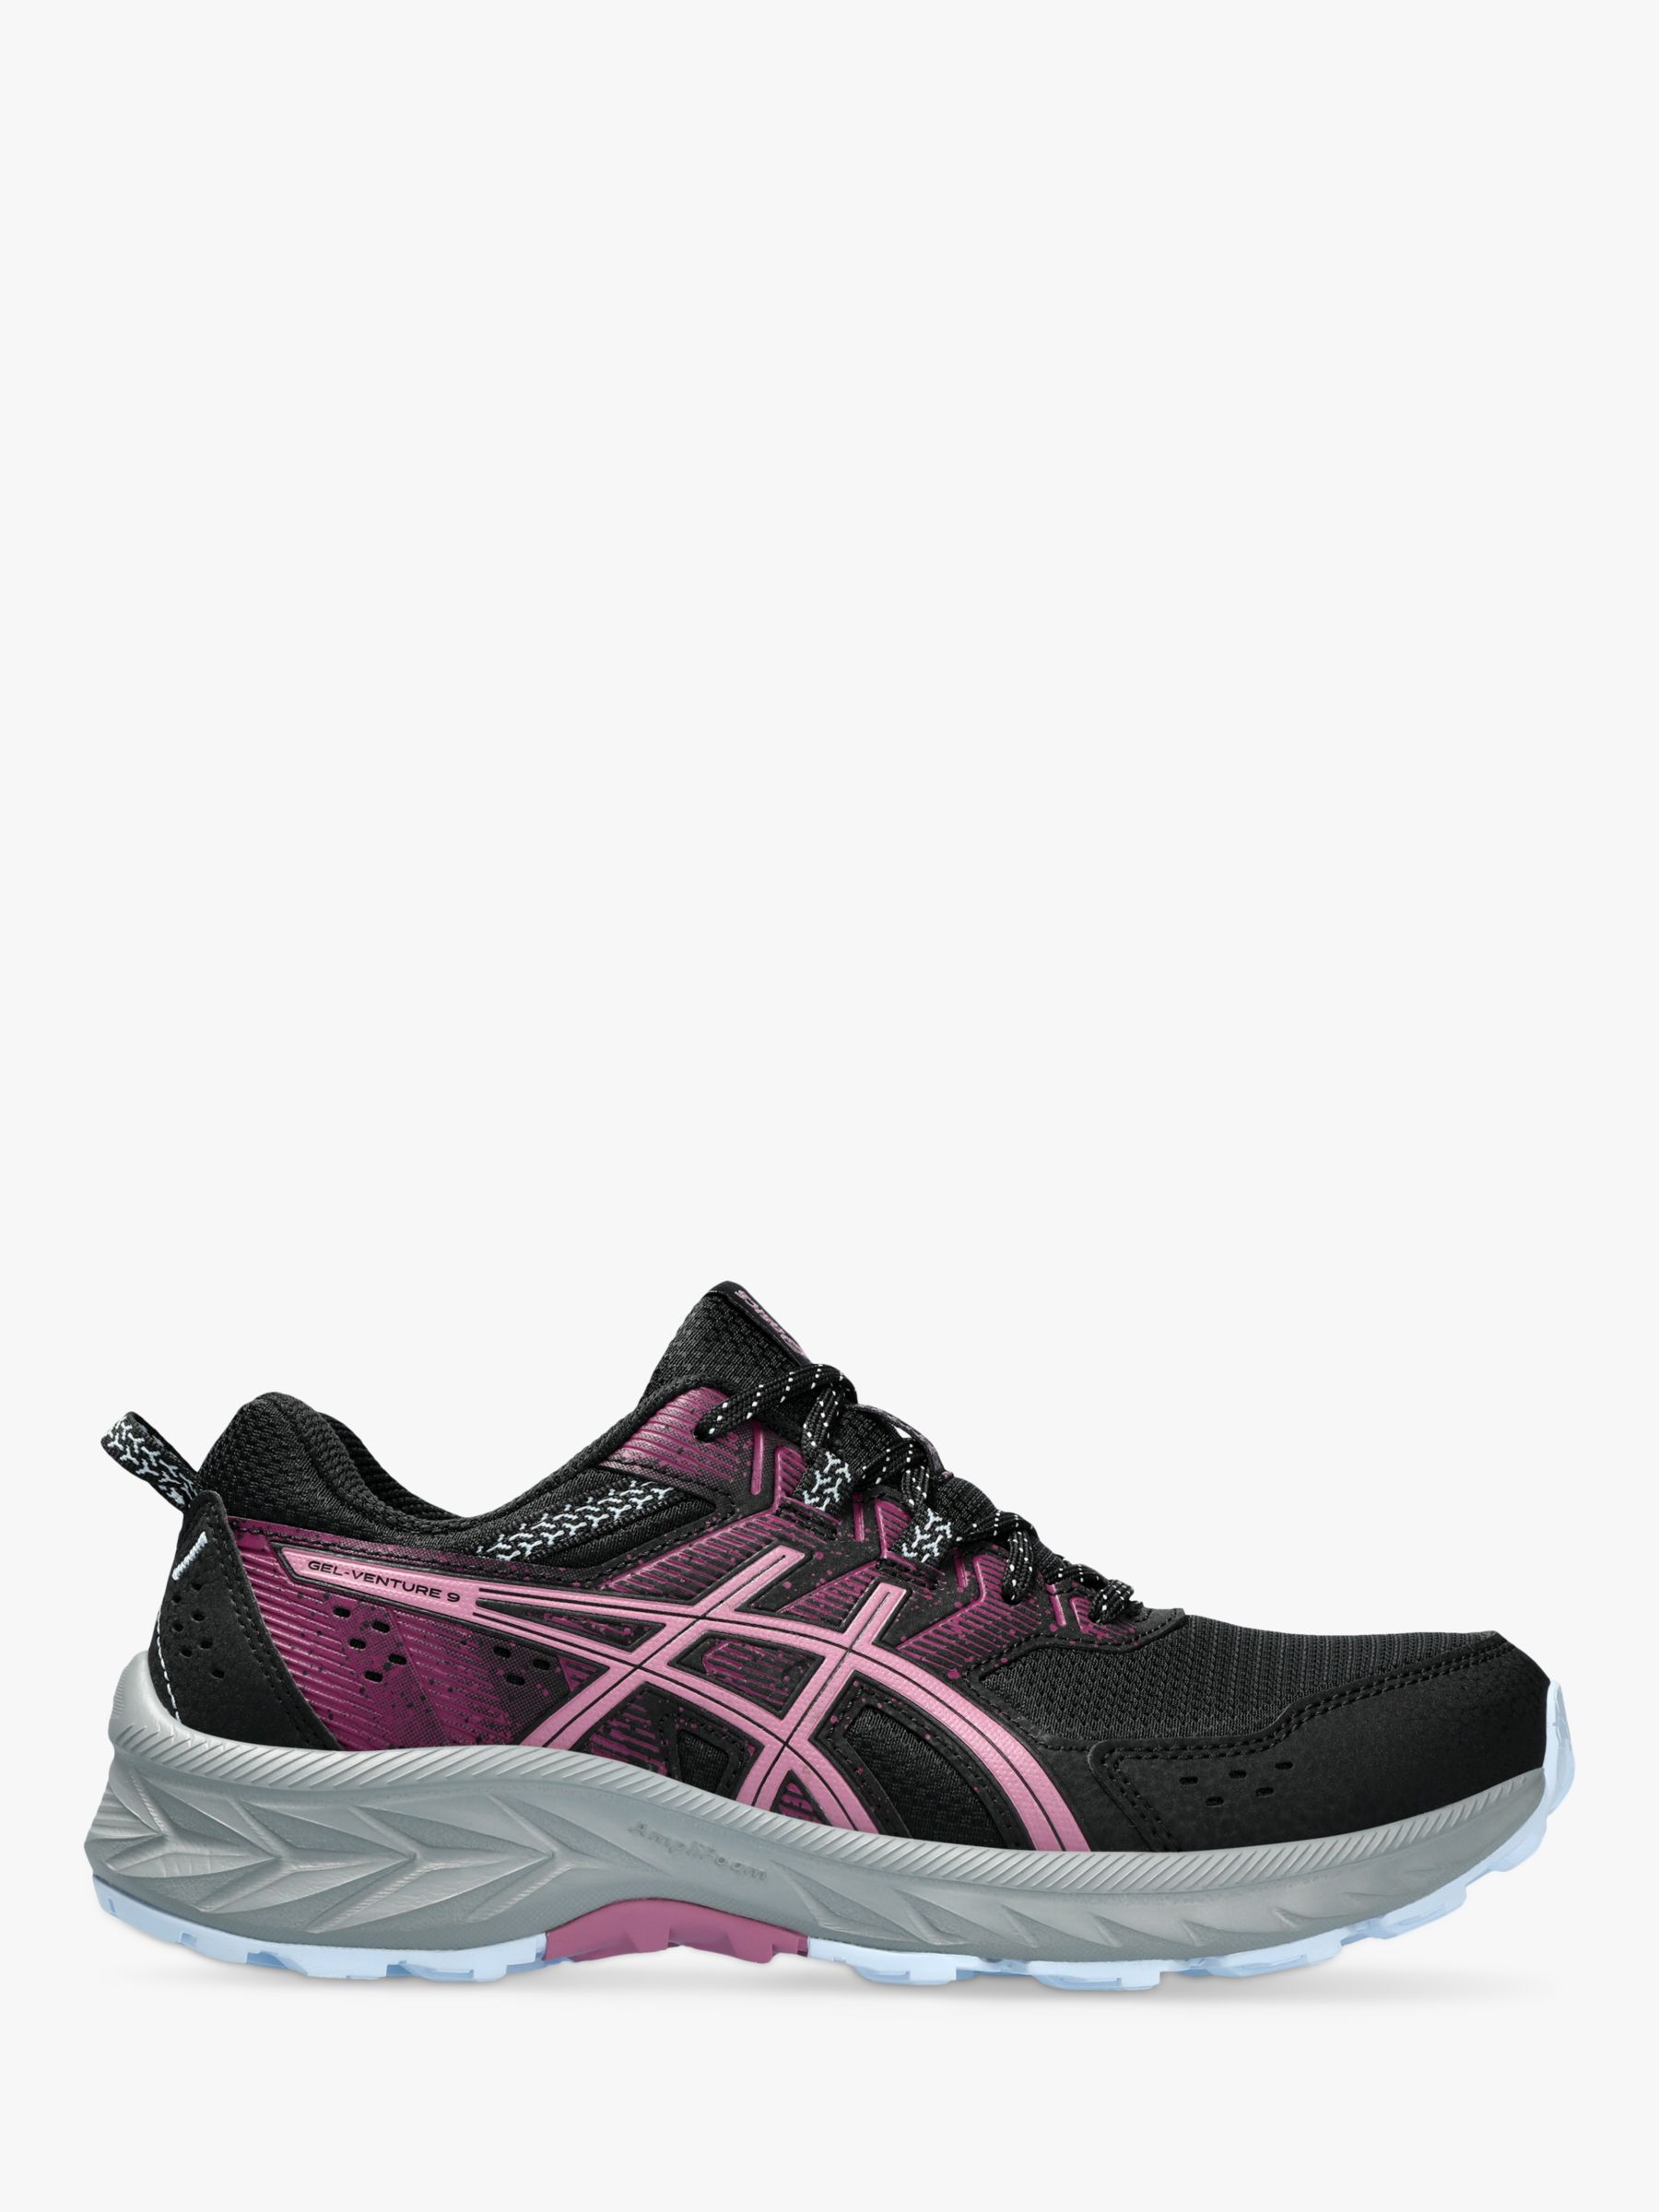 ASICS GEL-VENTURE 9 Women's Trail Running Shoes, Black/Berry, 4